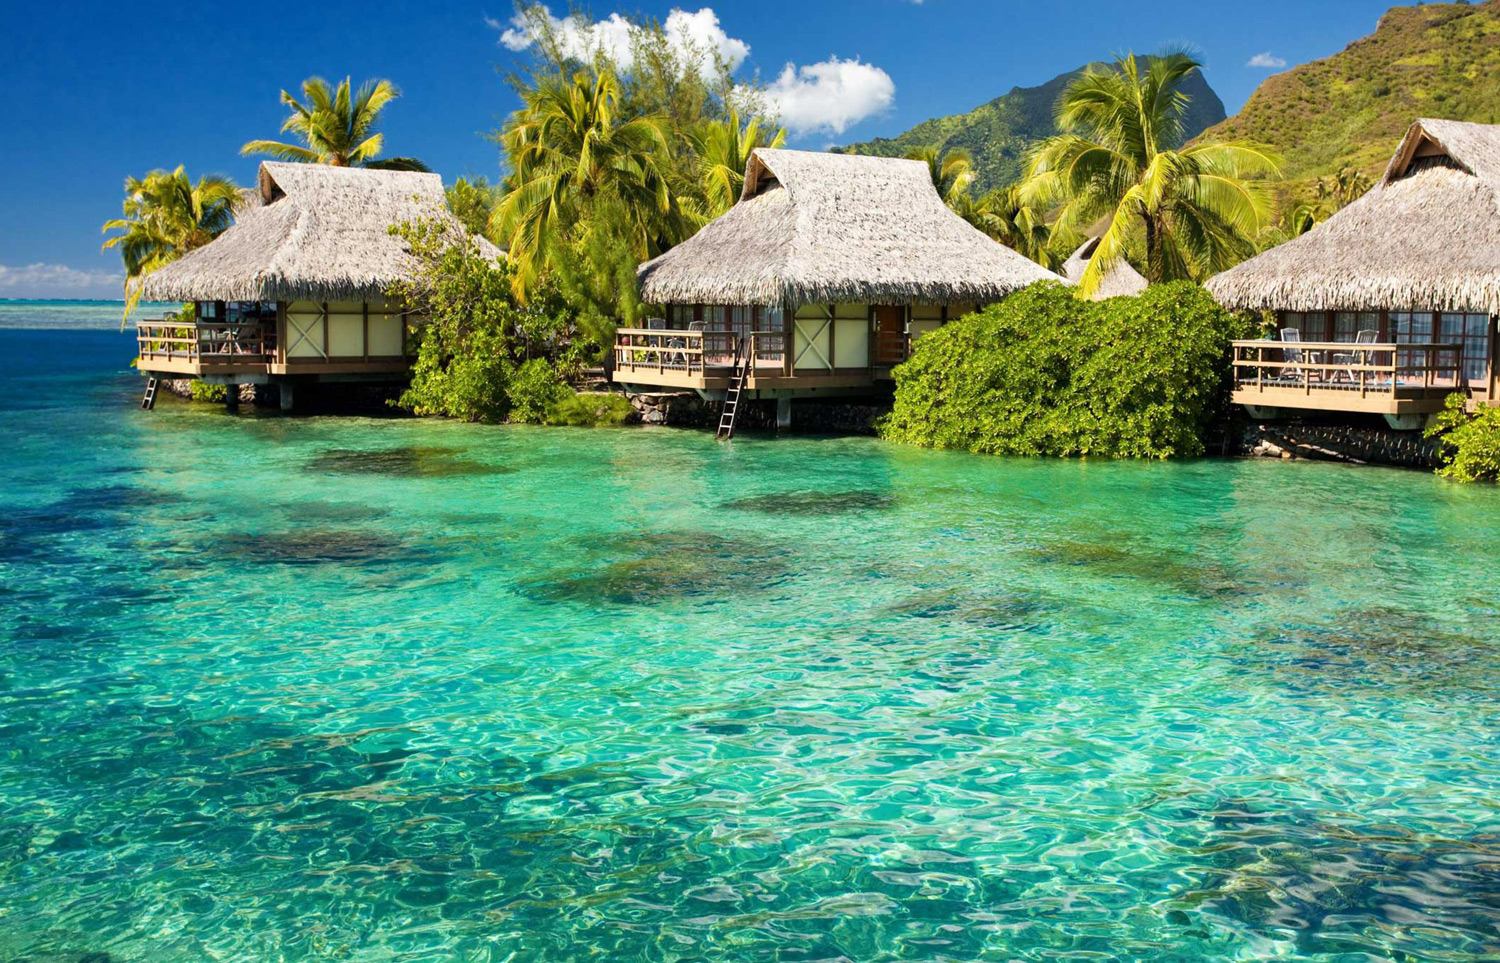 Karimunjawa Island o Isole Karimunjava: luxury resort